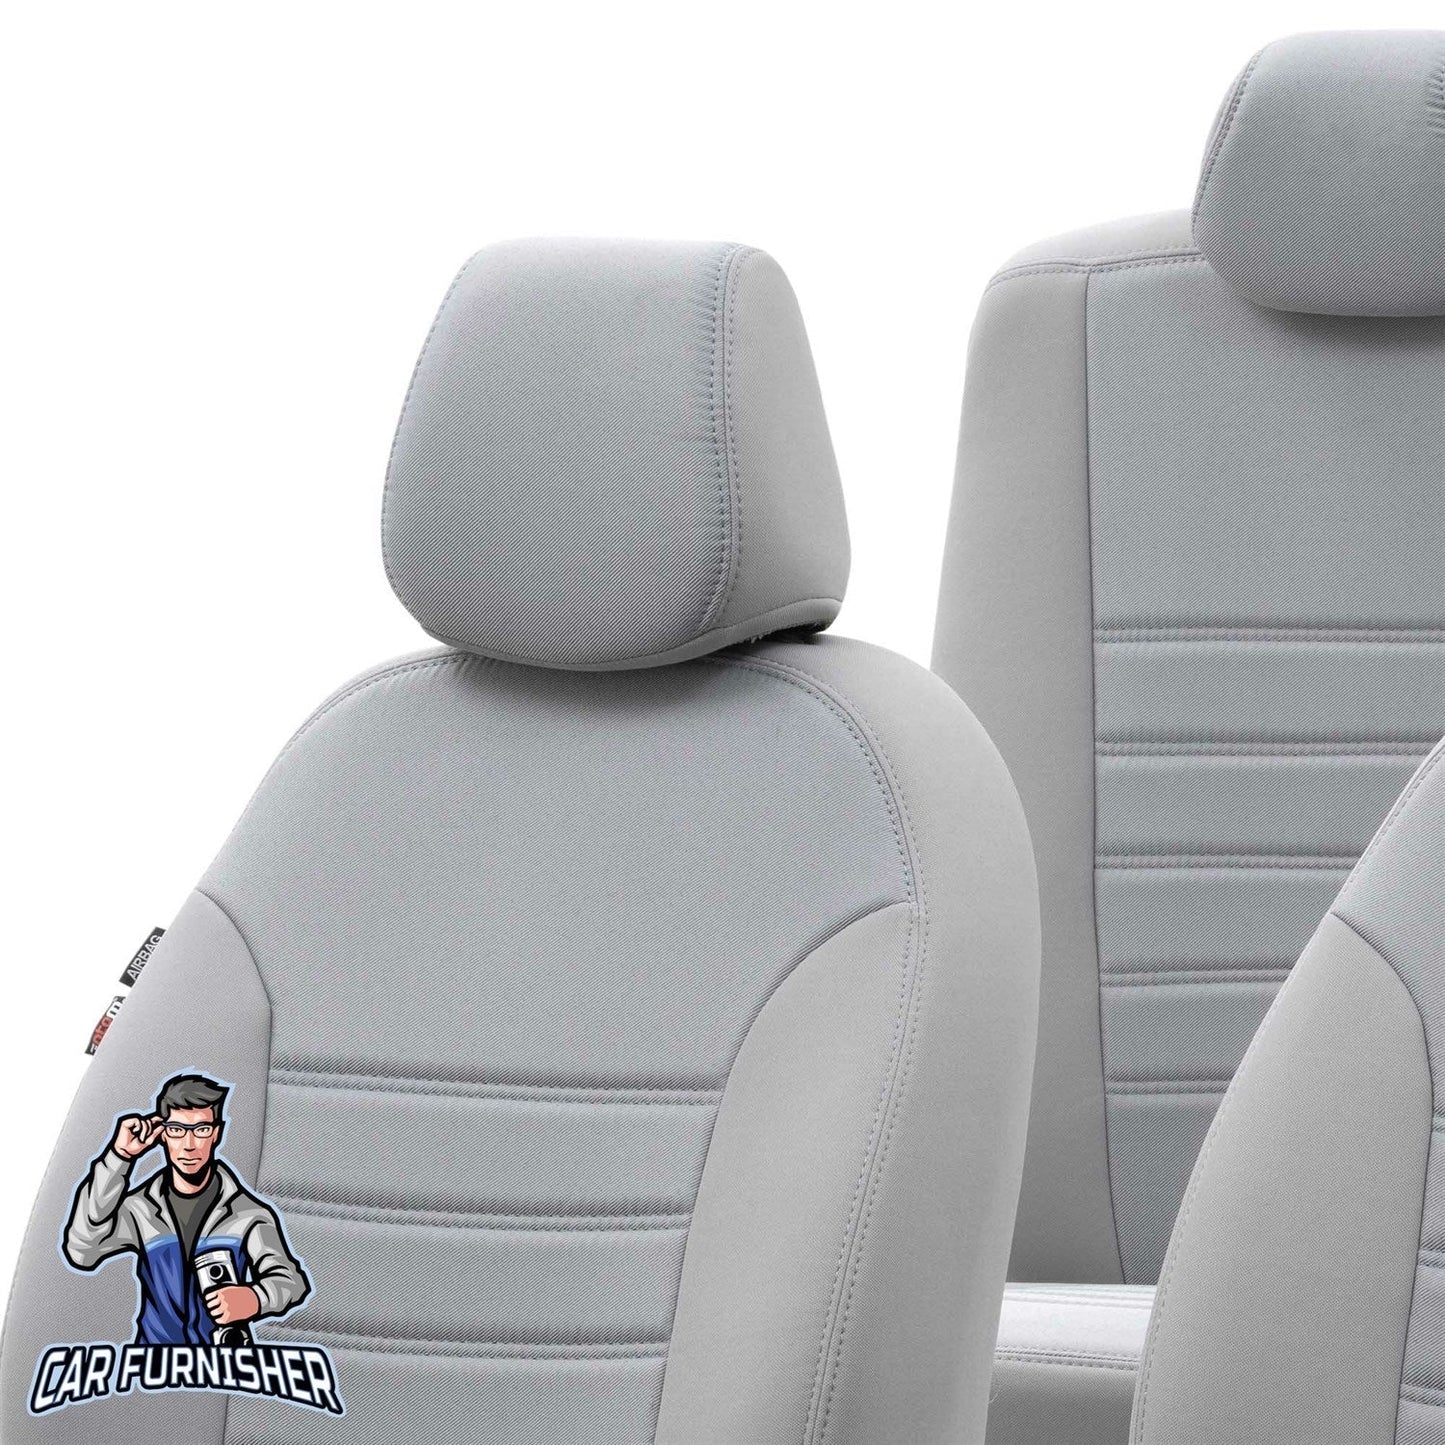 Fiat Palio Seat Covers Original Jacquard Design Light Gray Jacquard Fabric